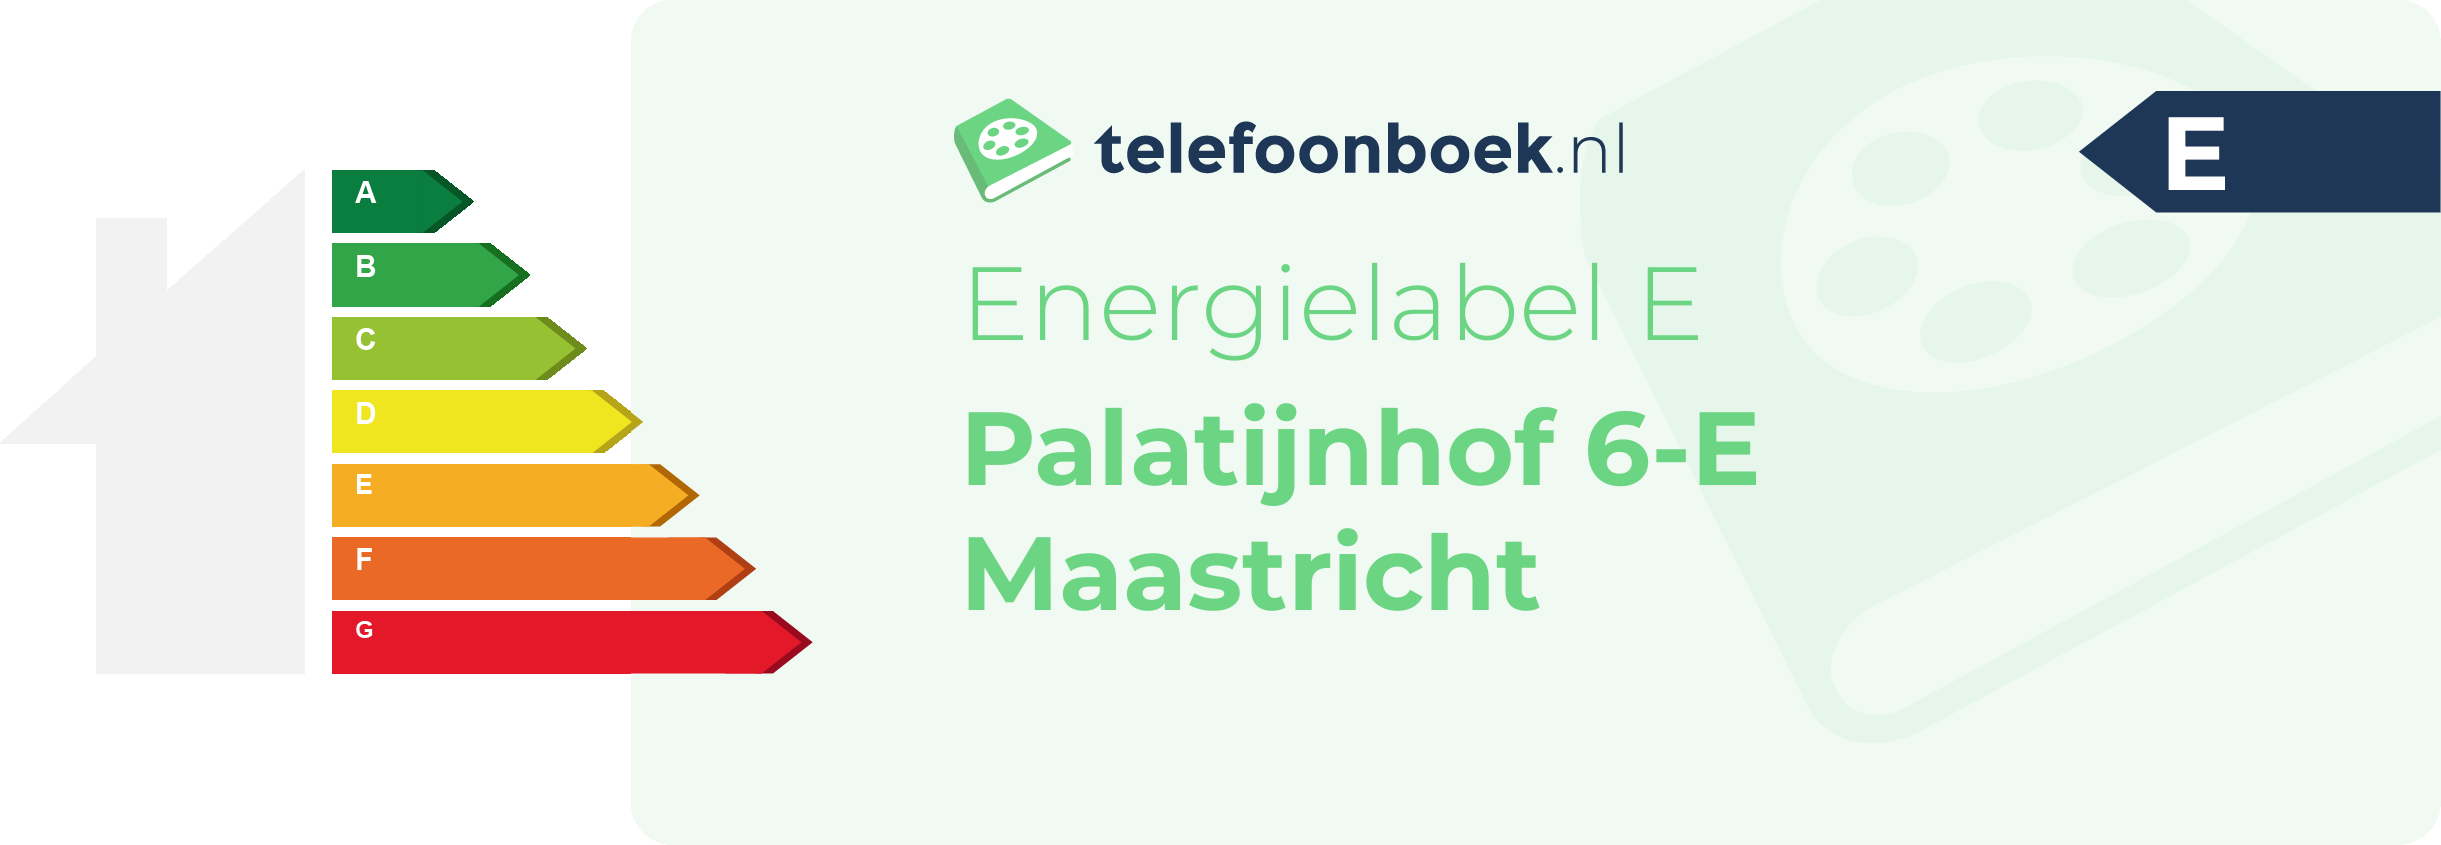 Energielabel Palatijnhof 6-E Maastricht